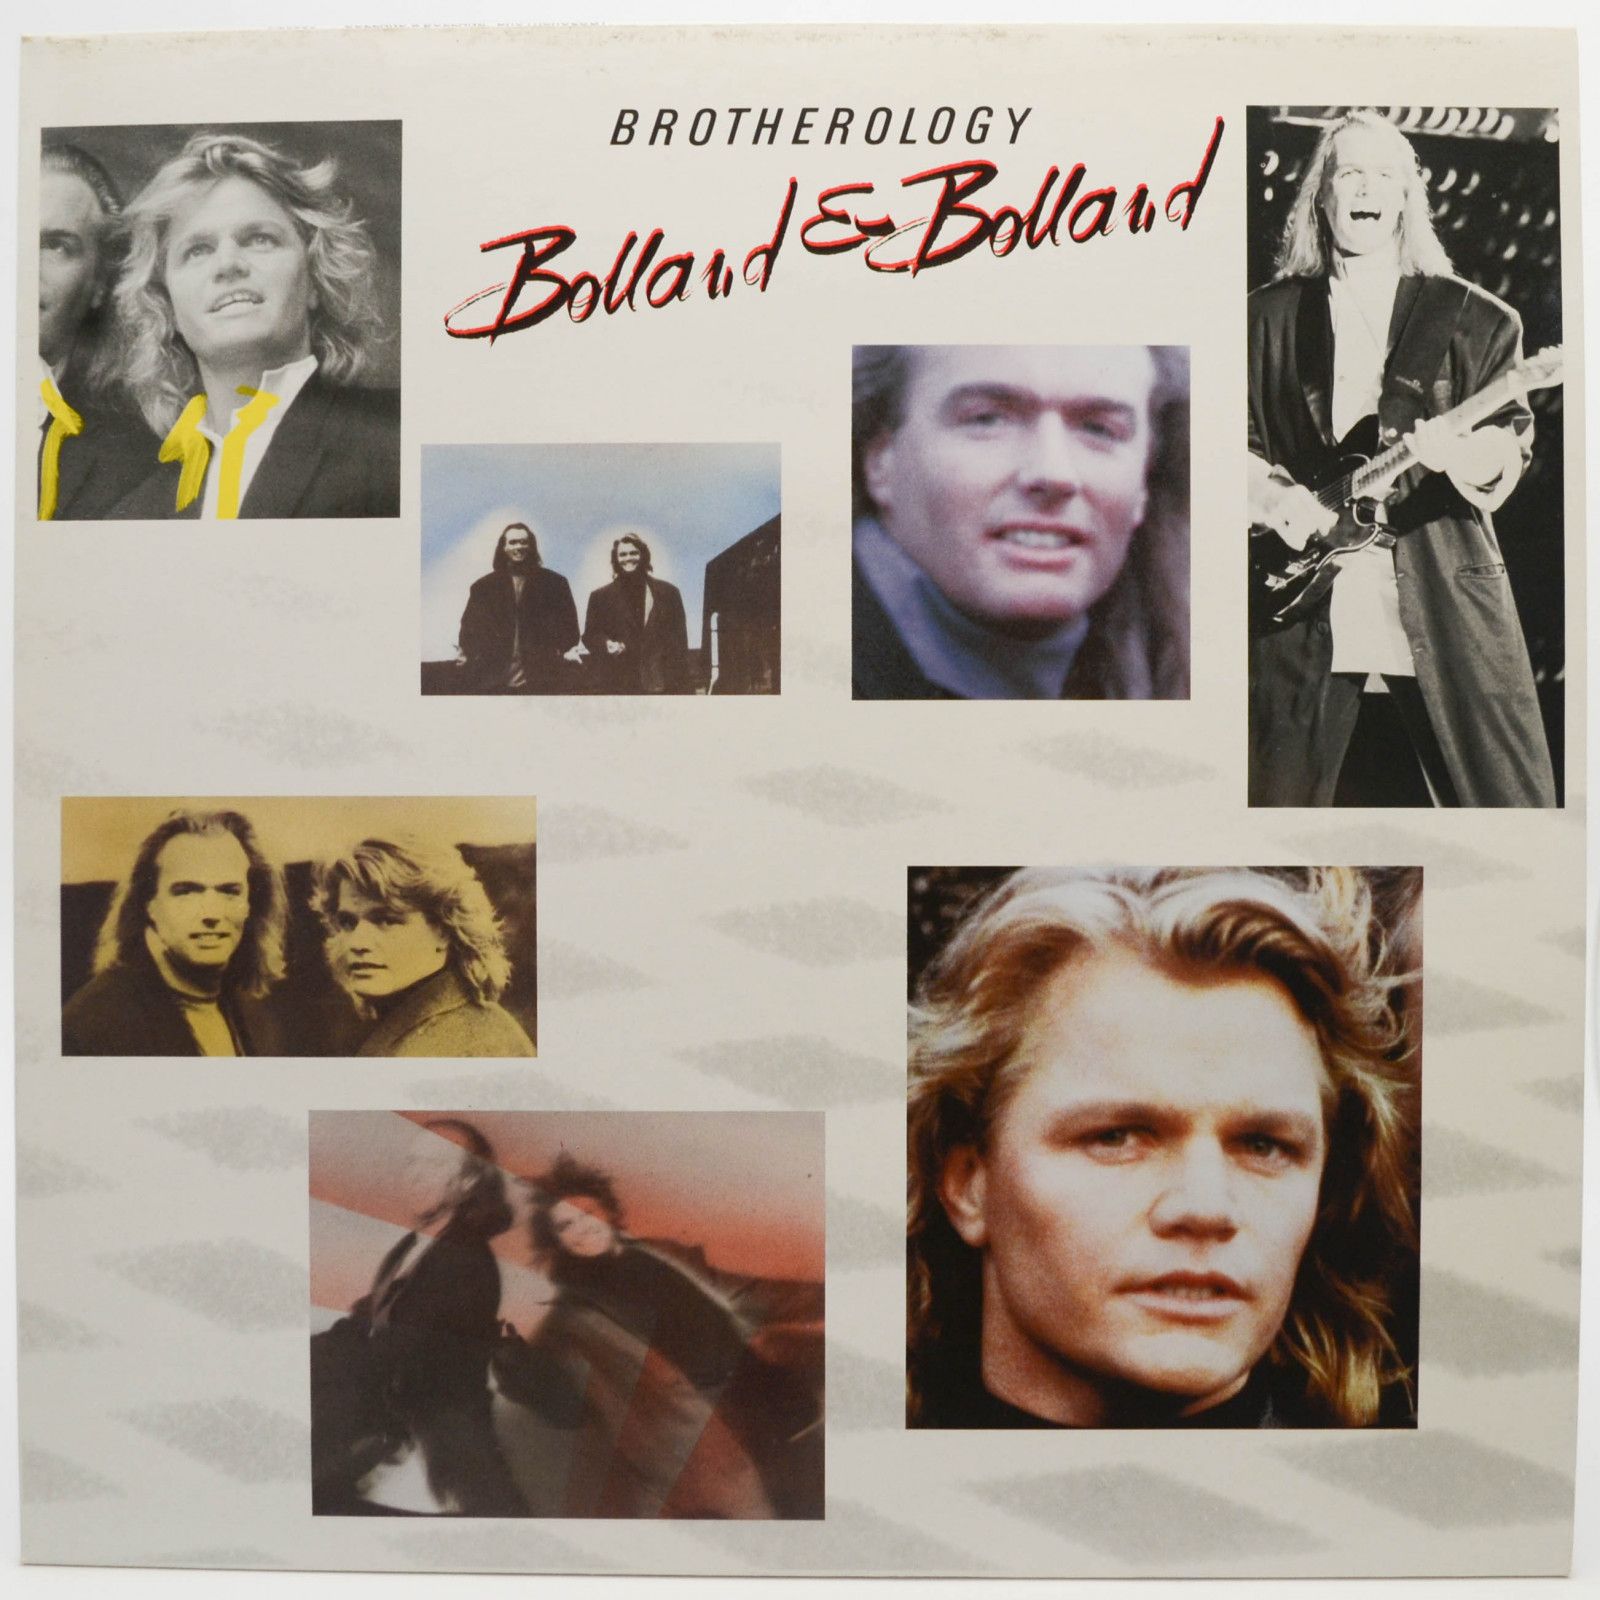 Bolland & Bolland — Brotherology, 1987